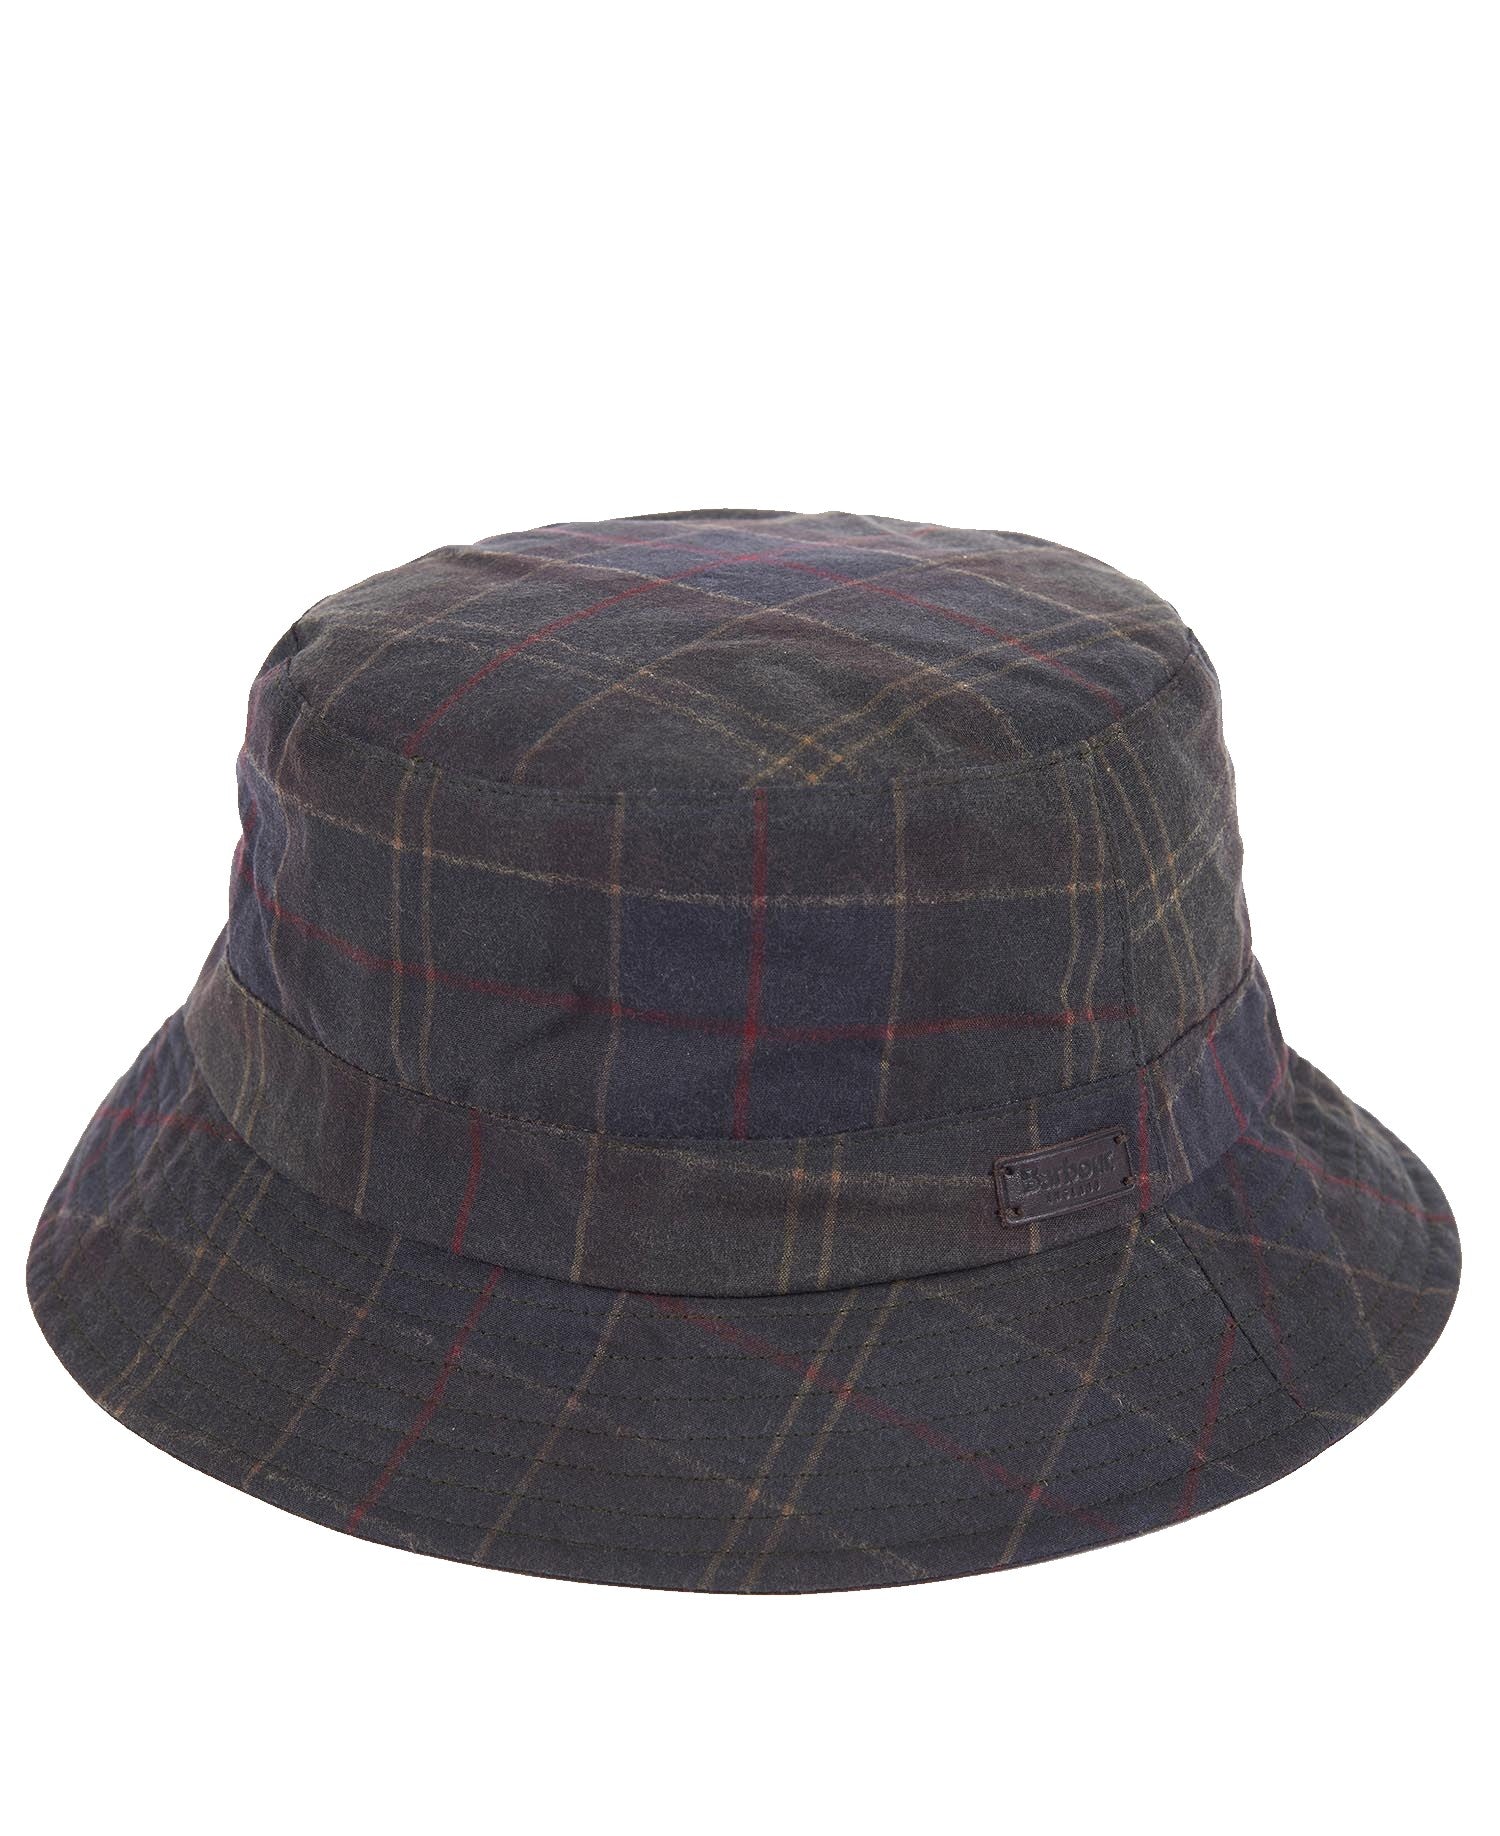 Barbour Darwen Classic Tartan Wax Sports Hat